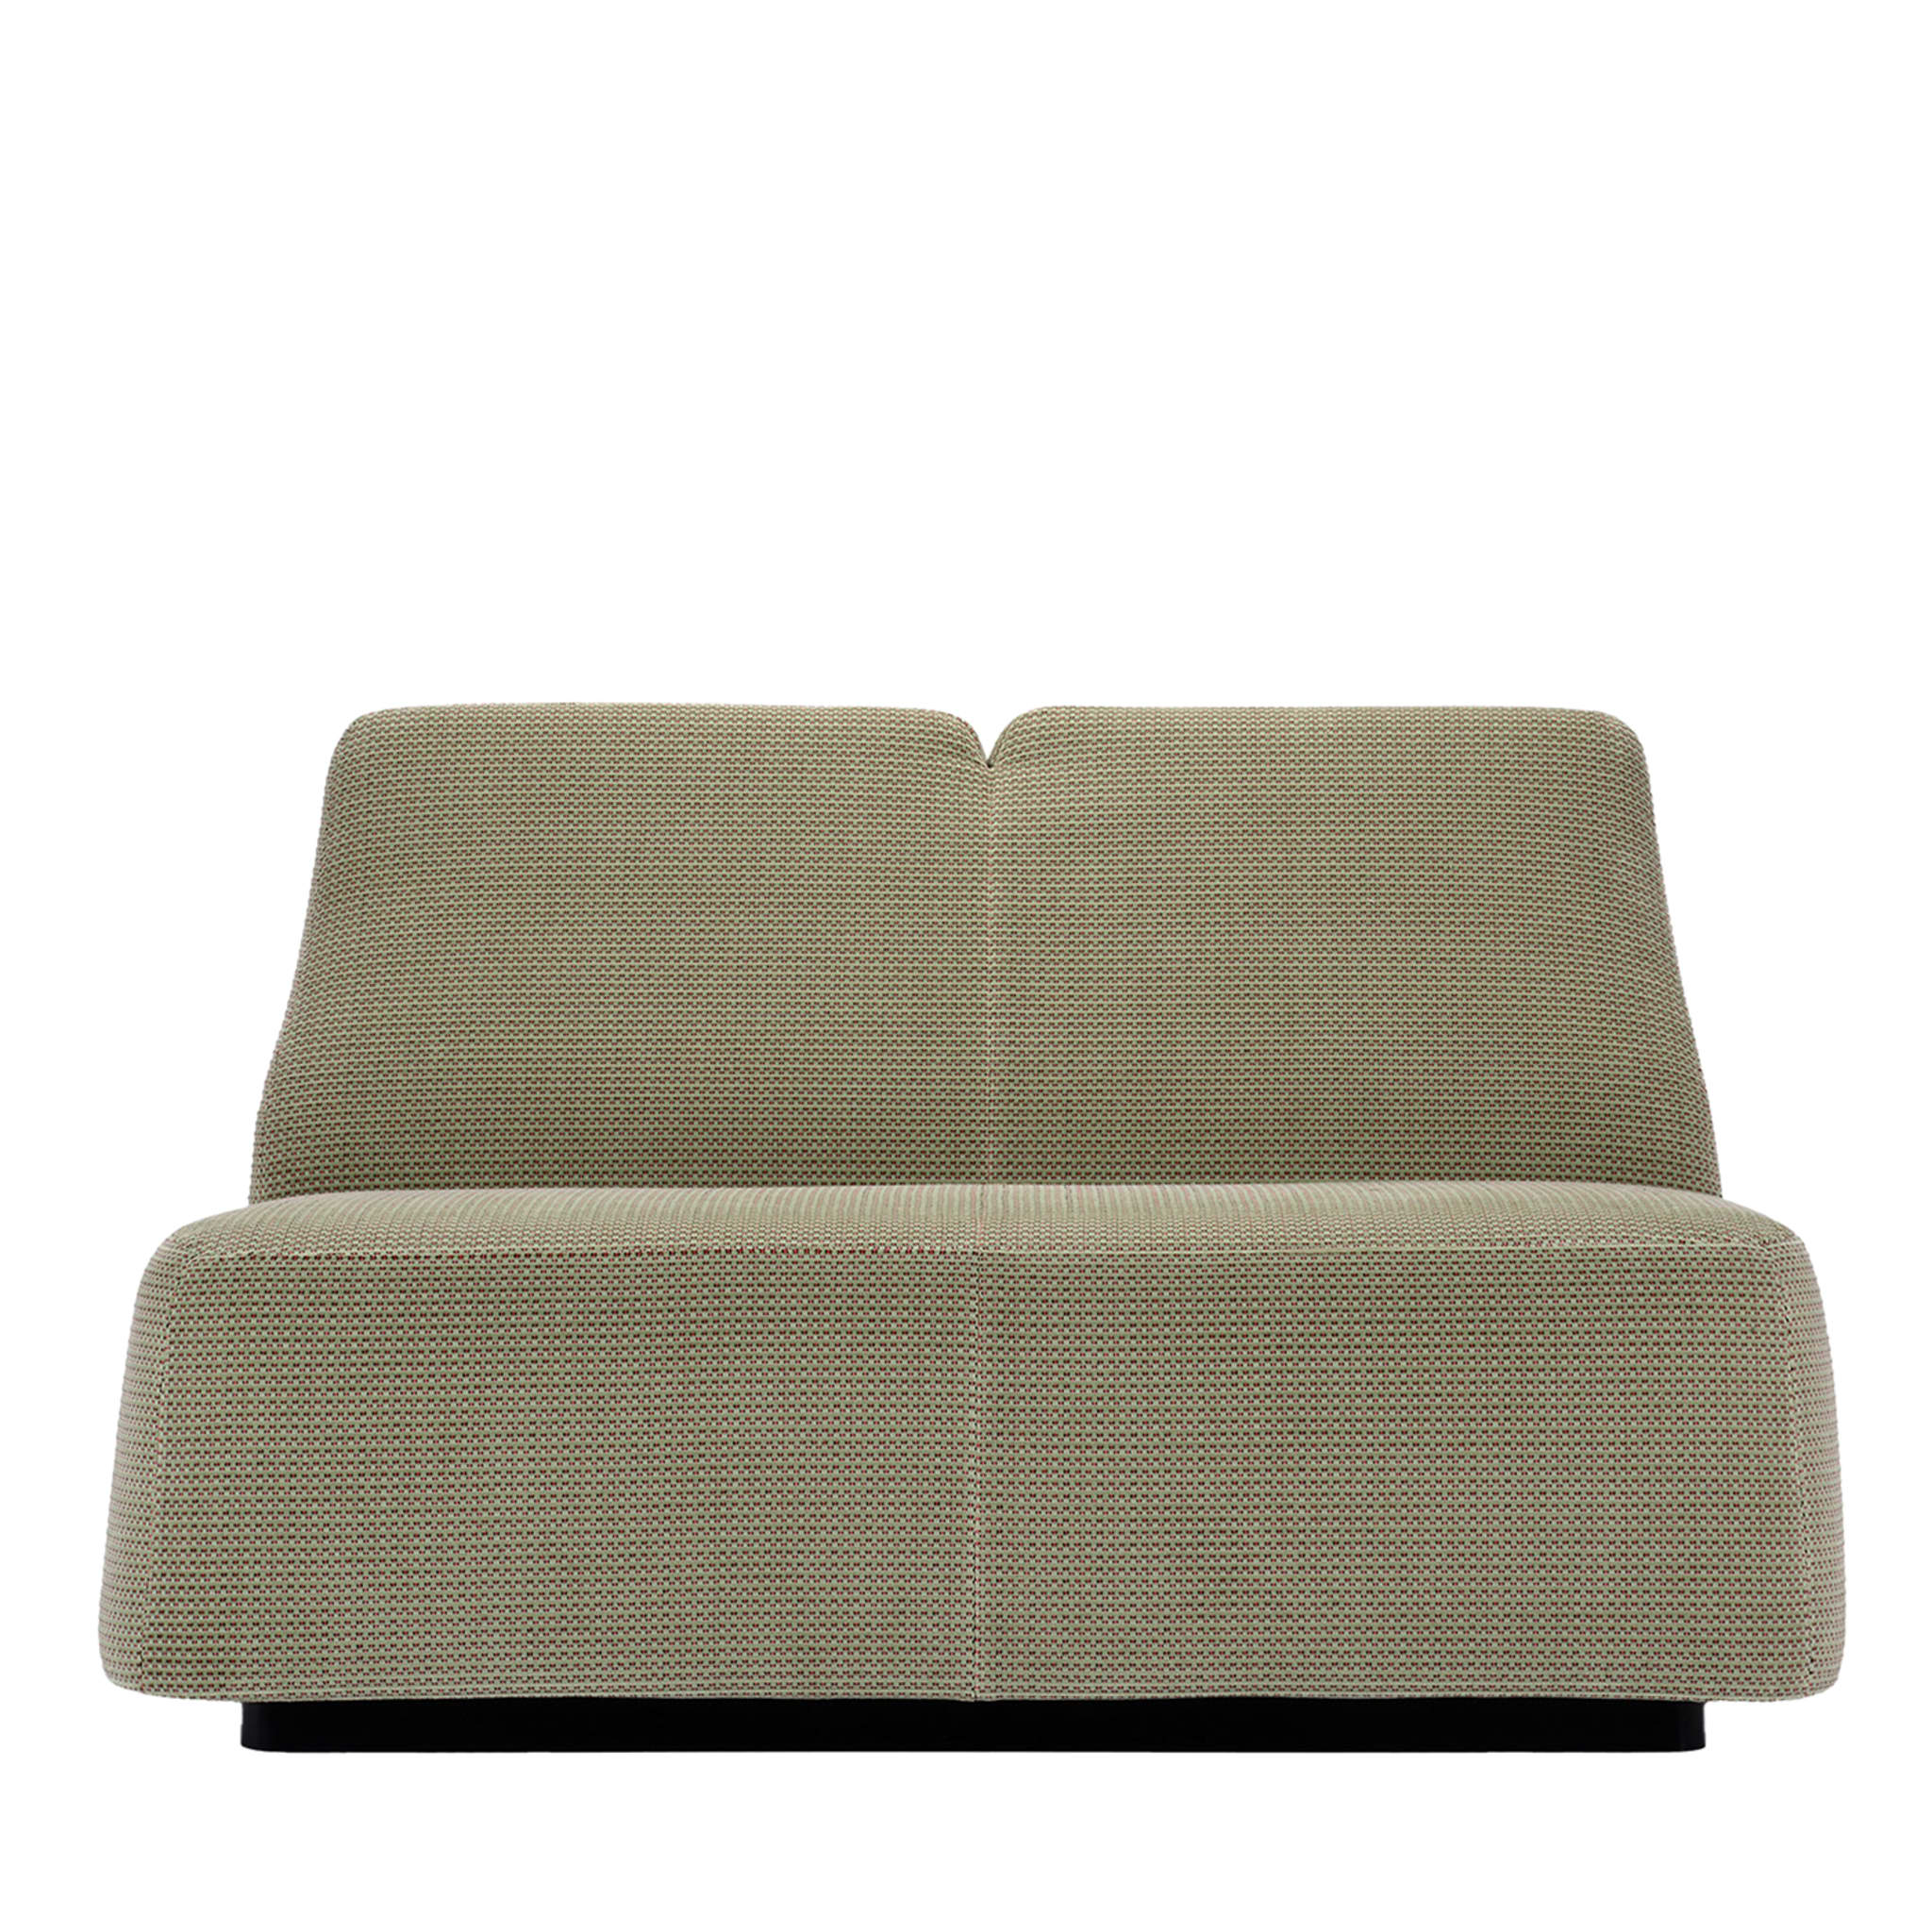 Nuda 2-sitzer graues sofa von Simone Micheli - Hauptansicht